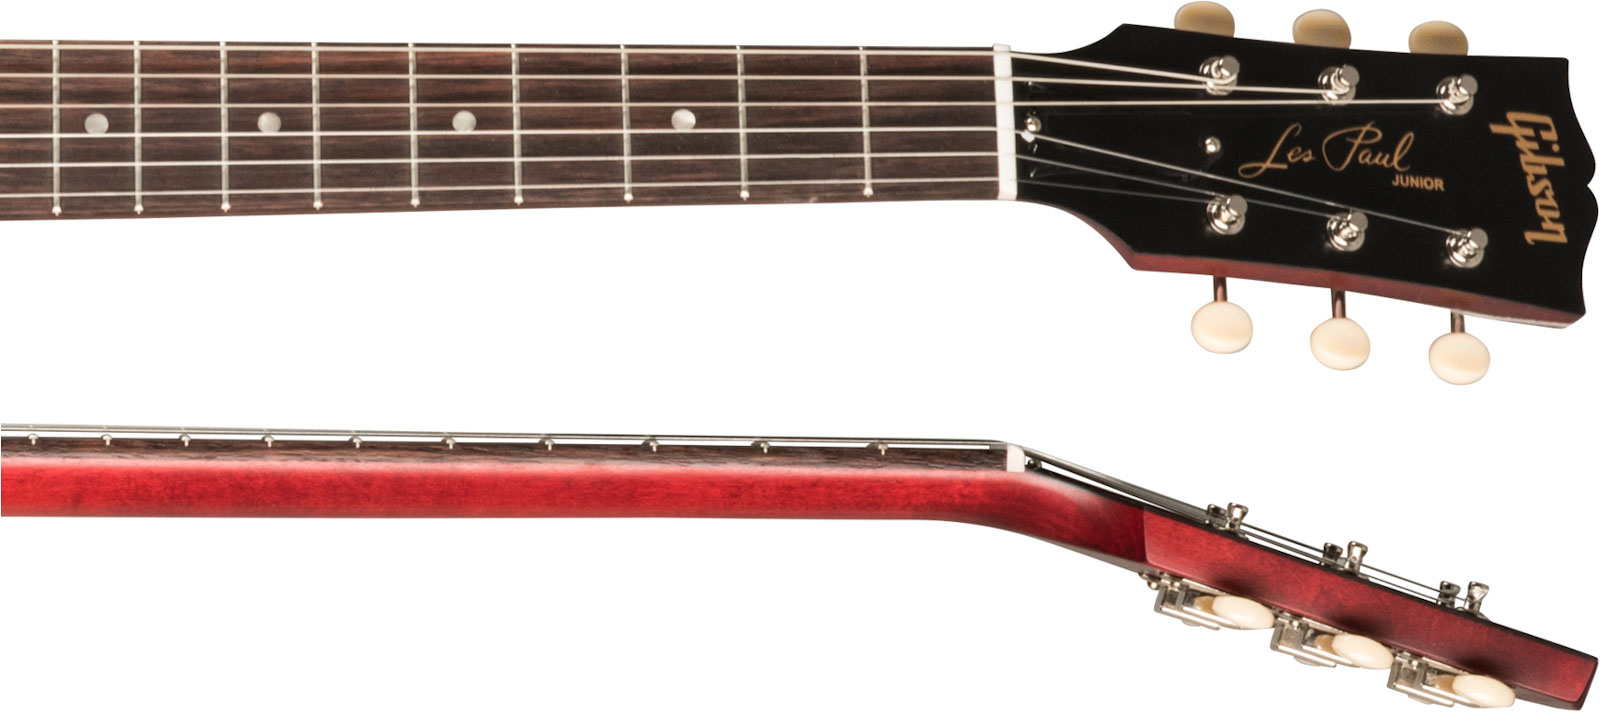 Gibson Les Paul Junior Tribute Dc Modern P90 - Worn Cherry - Double cut electric guitar - Variation 3